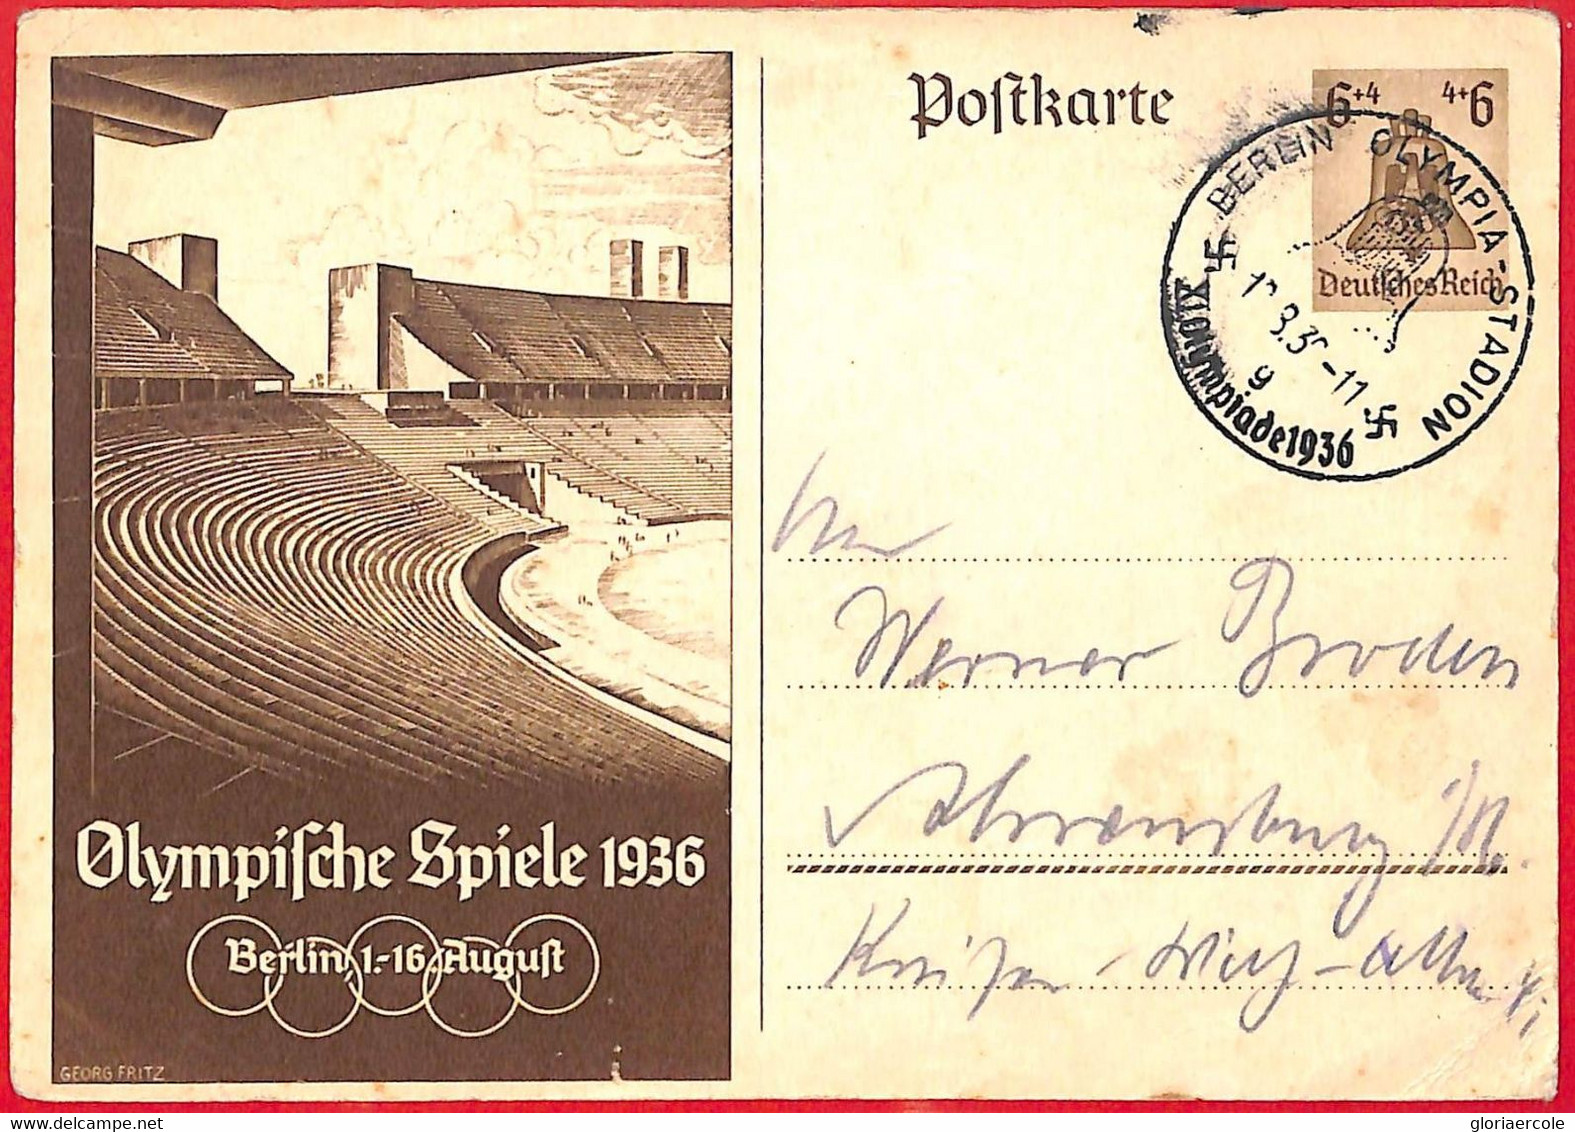 Aa2572 - Germany - POSTAL HISTORY - 1936 Olympic Games SPECIAL POSTMARK Stadium - Sommer 1936: Berlin